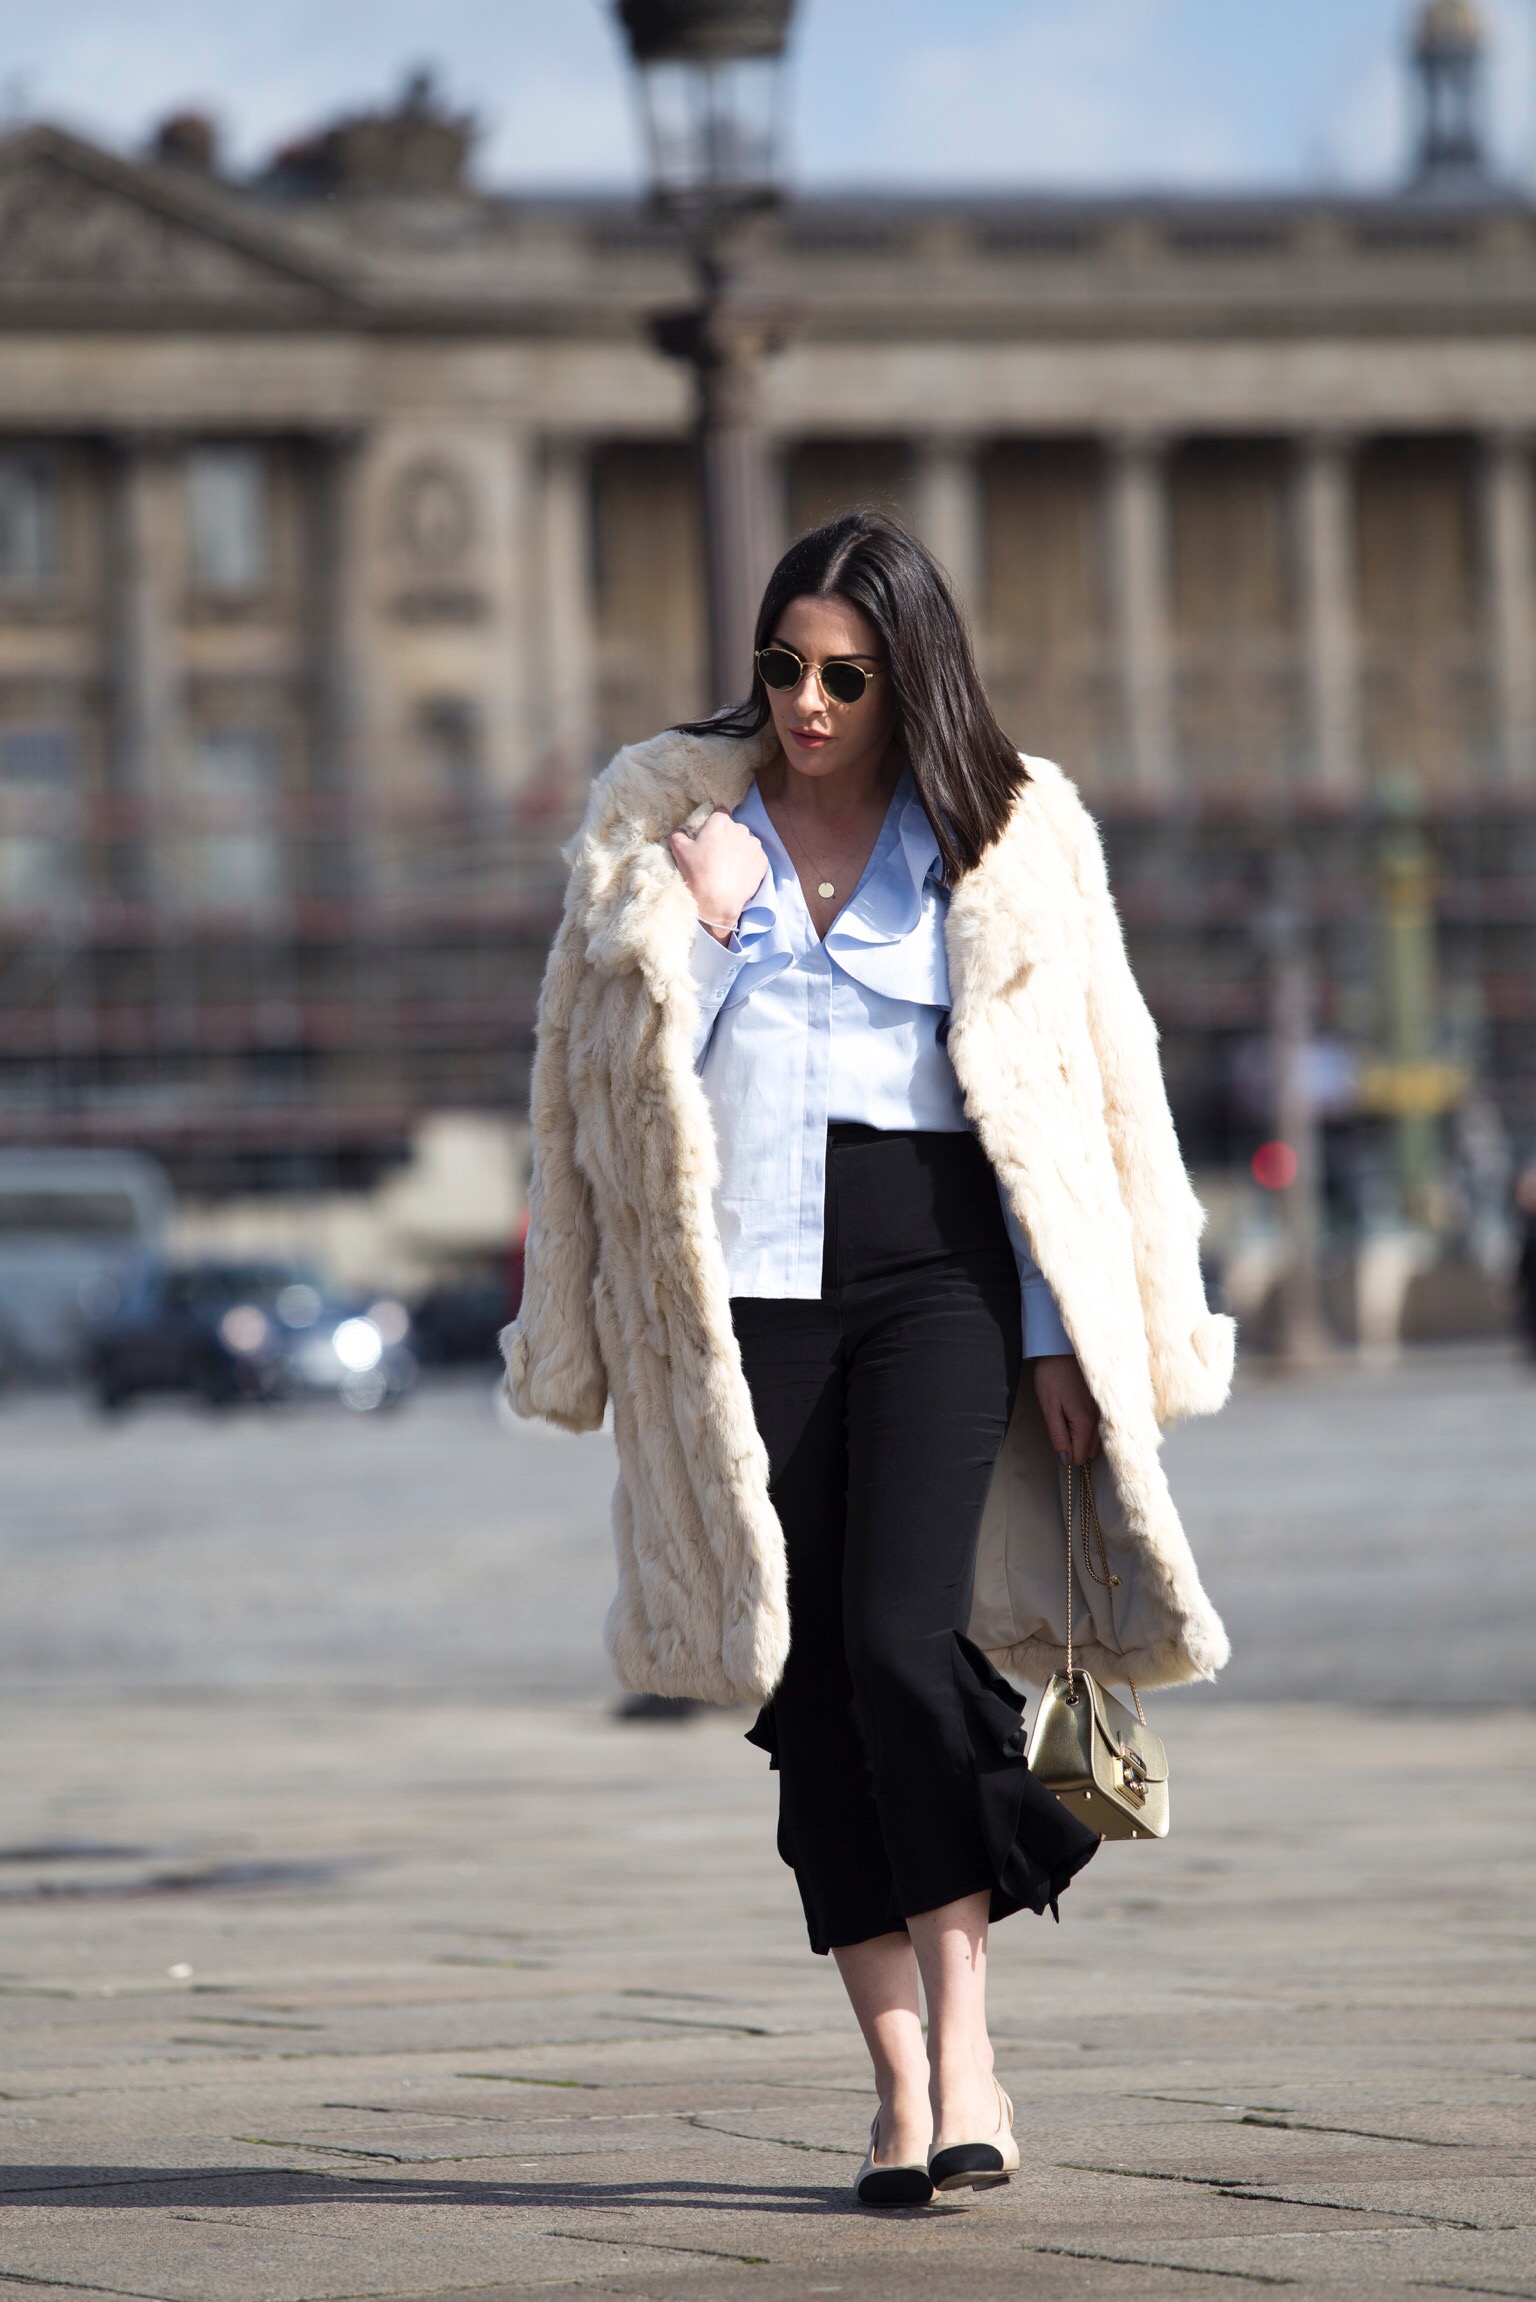 Stella Asteria Fashion & Lifestyle Blogger wearing riffled blouse & Chanel slingback at Paris Fashion Week 